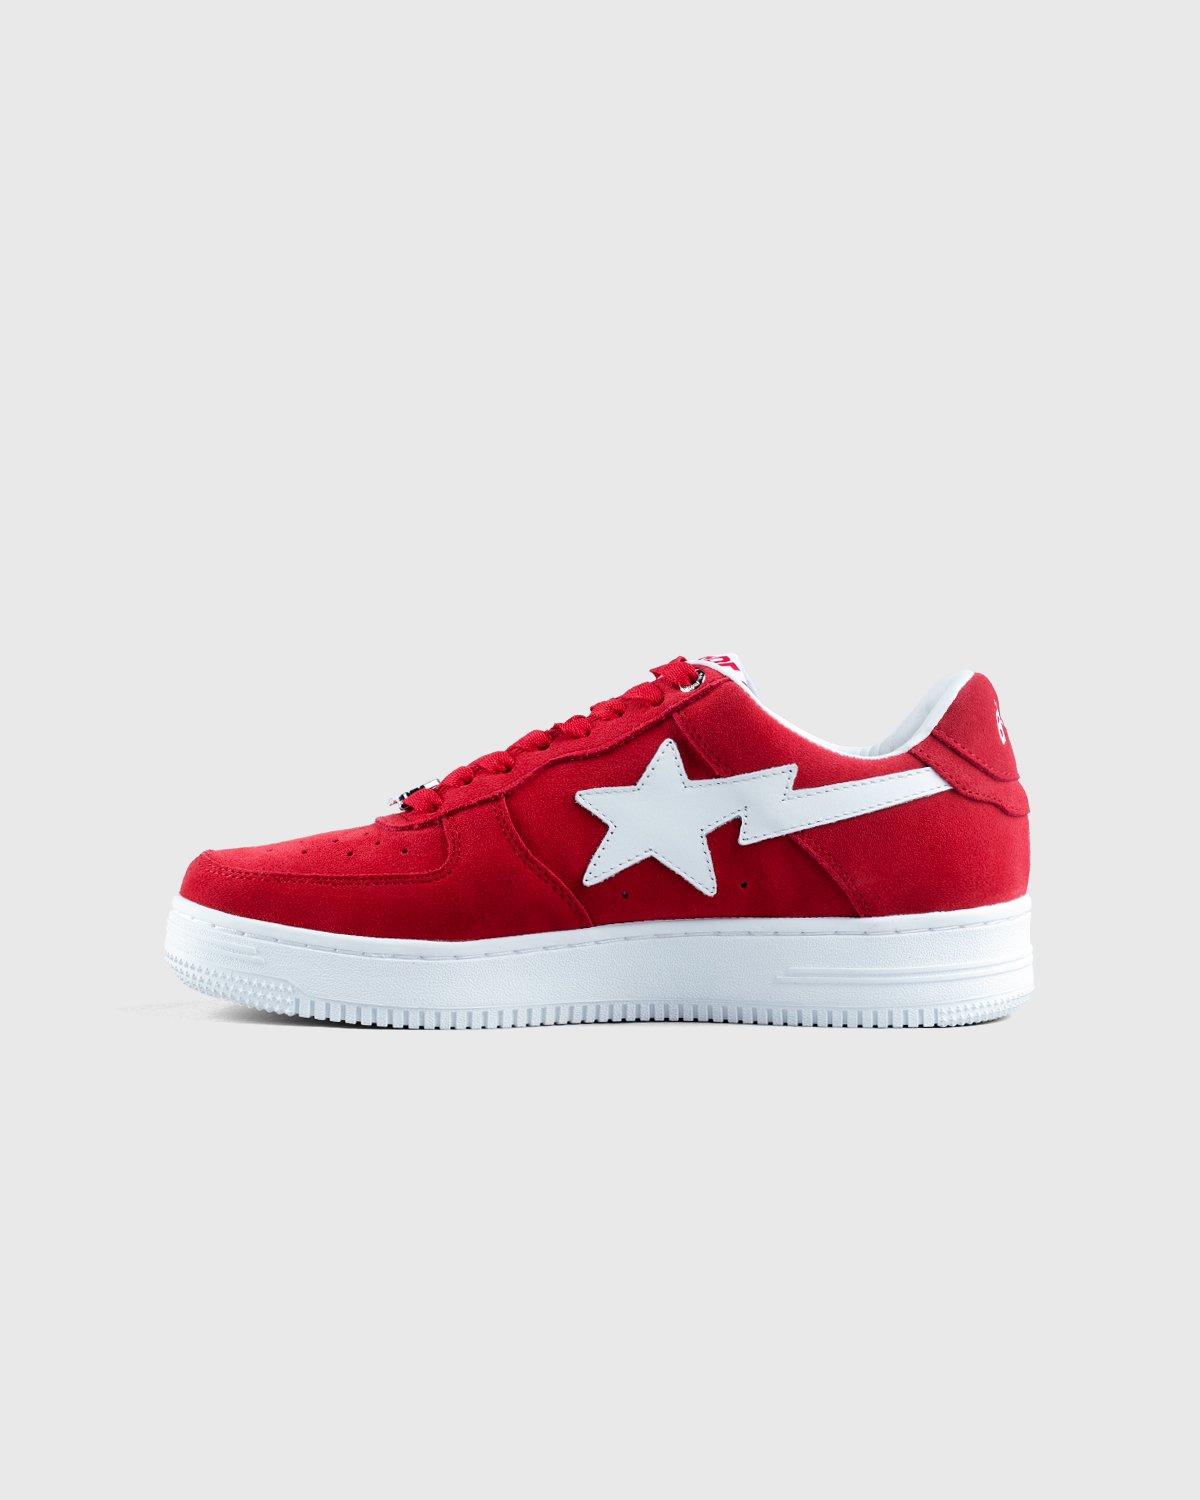 BAPE x Highsnobiety - BAPE STA Red - Footwear - Red - Image 4